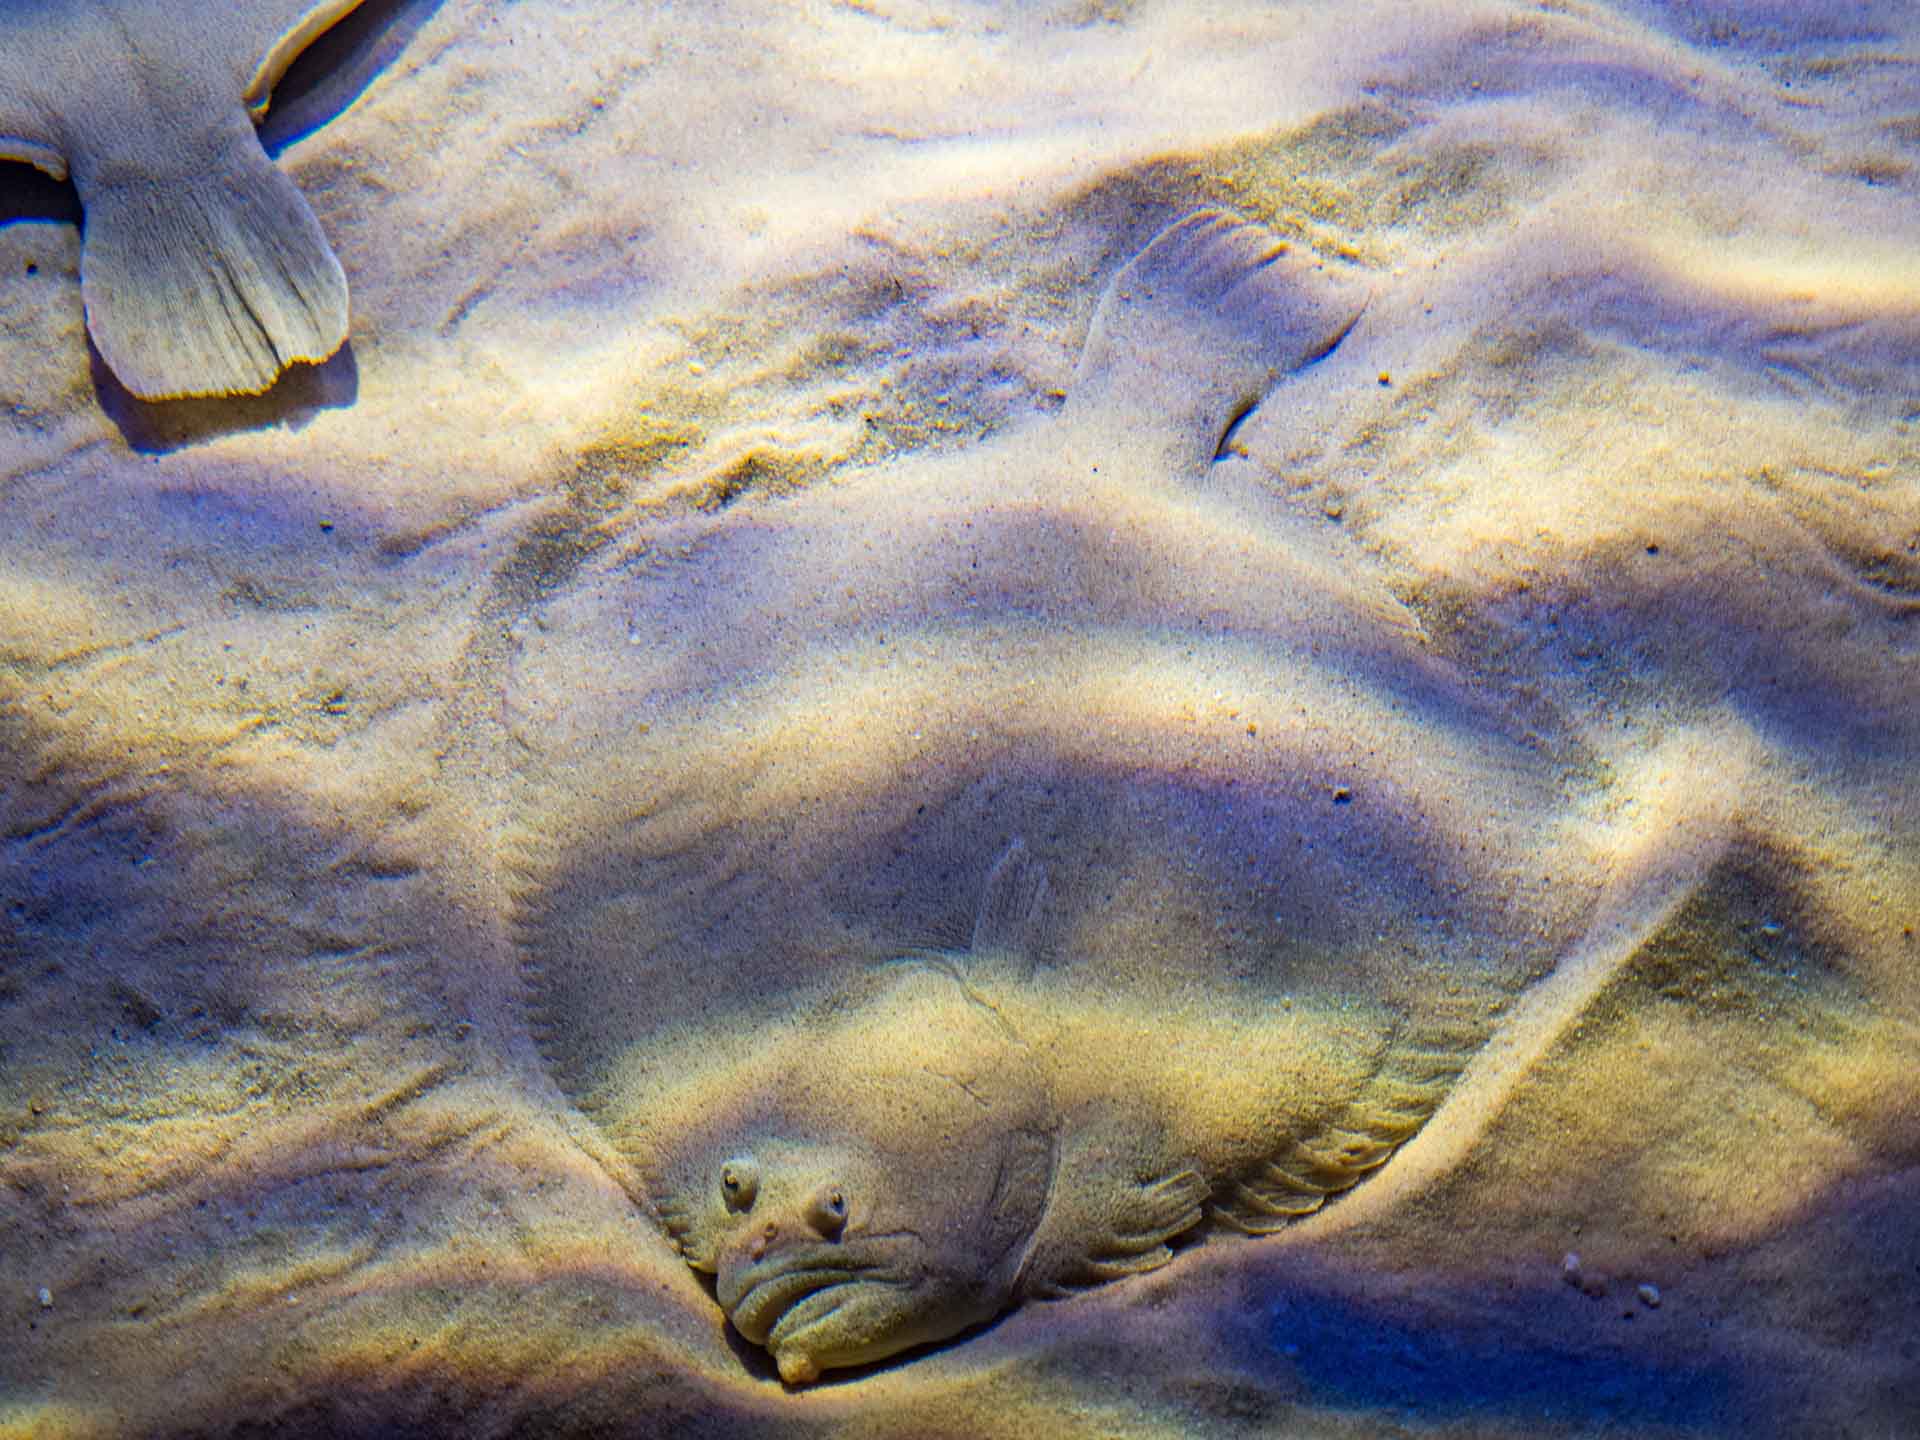 Flounder fish on a sandy bottom